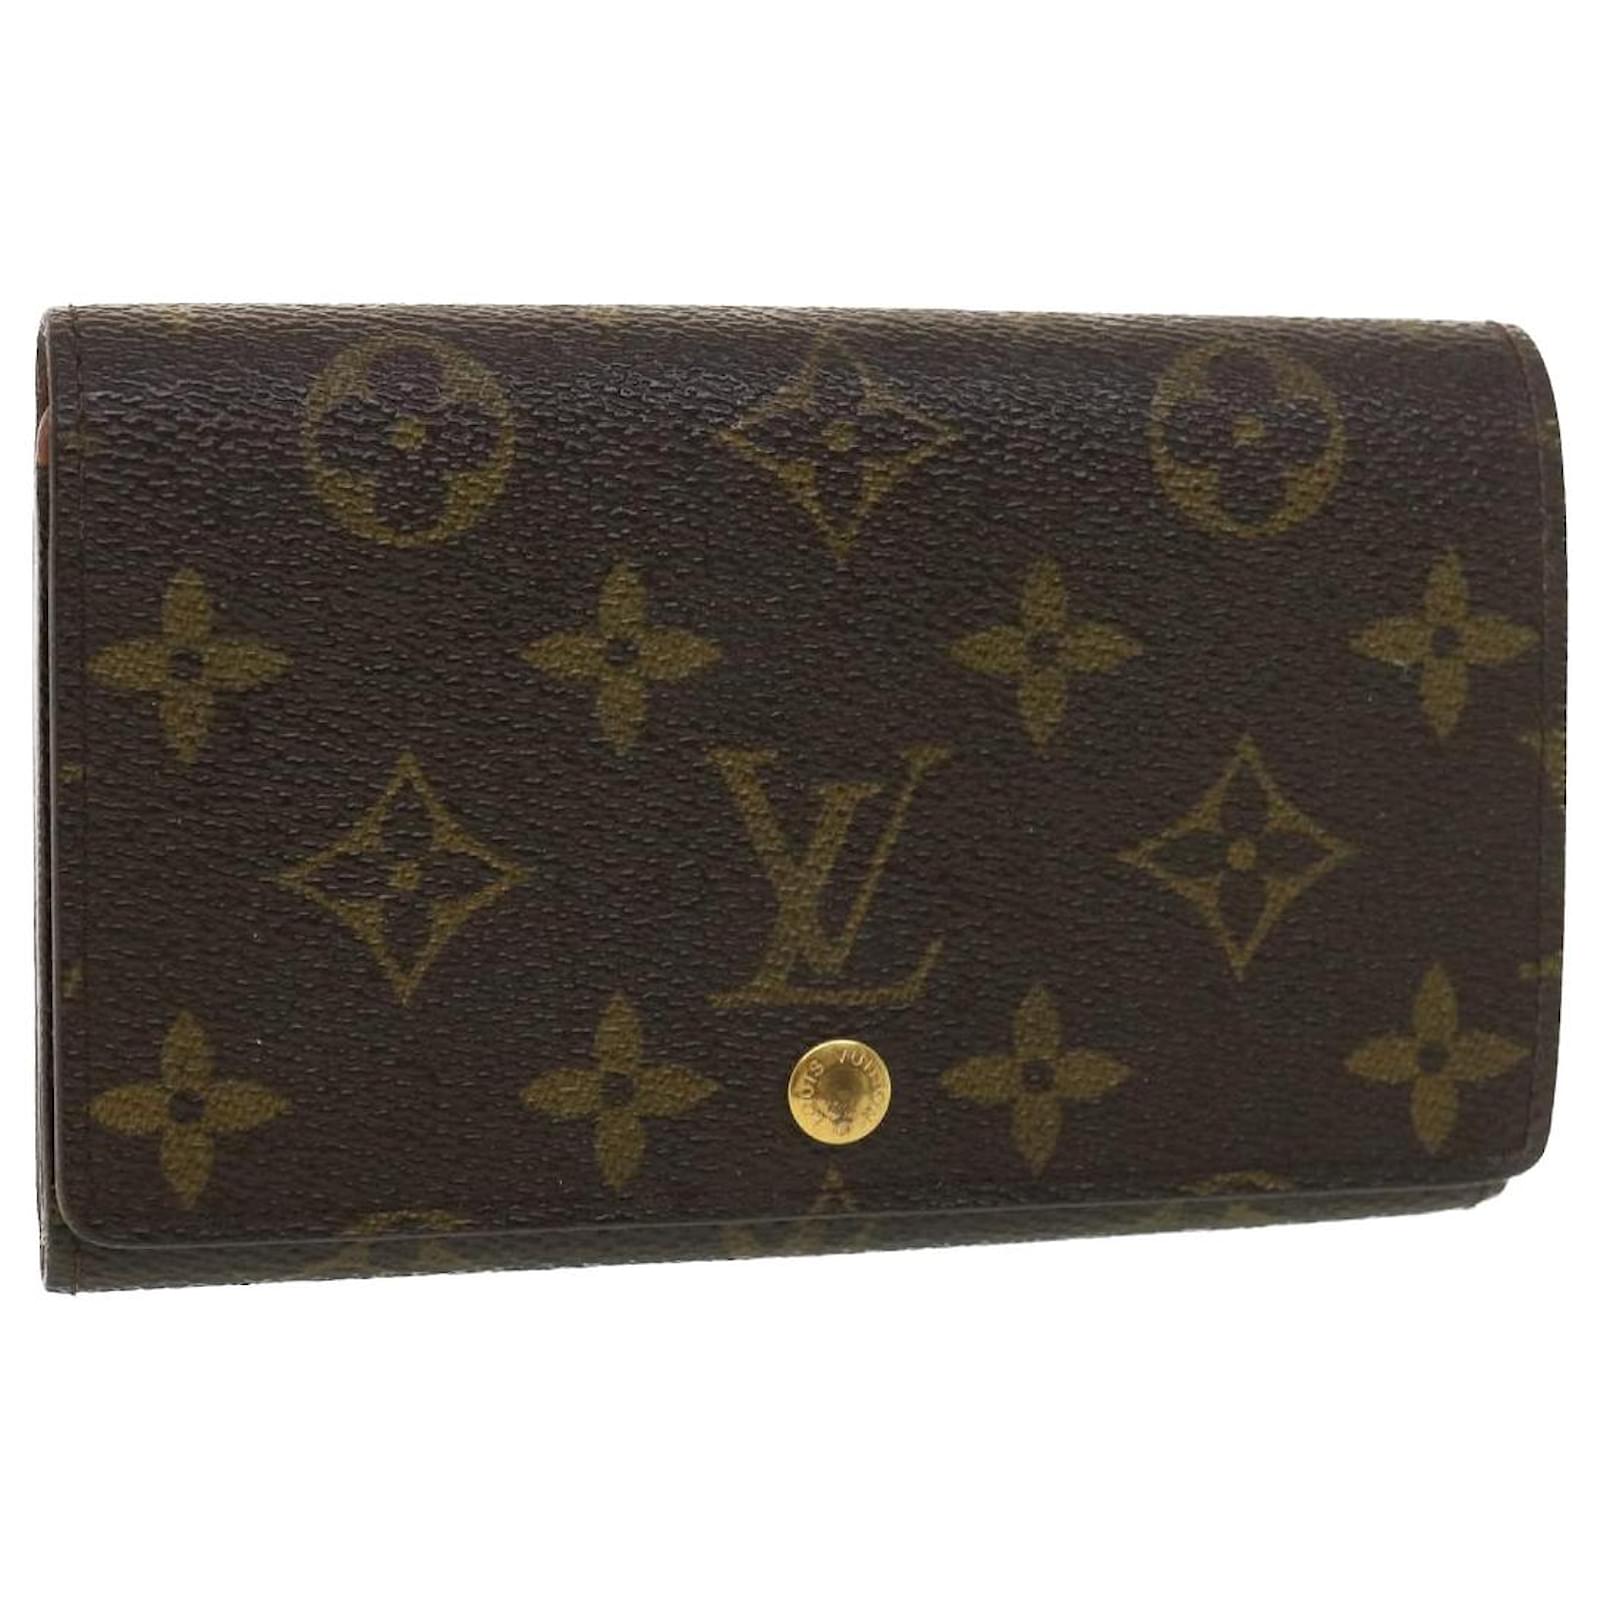 Louis Vuitton Monogram Porte-Monnaie Tresor Wallet in Monogram